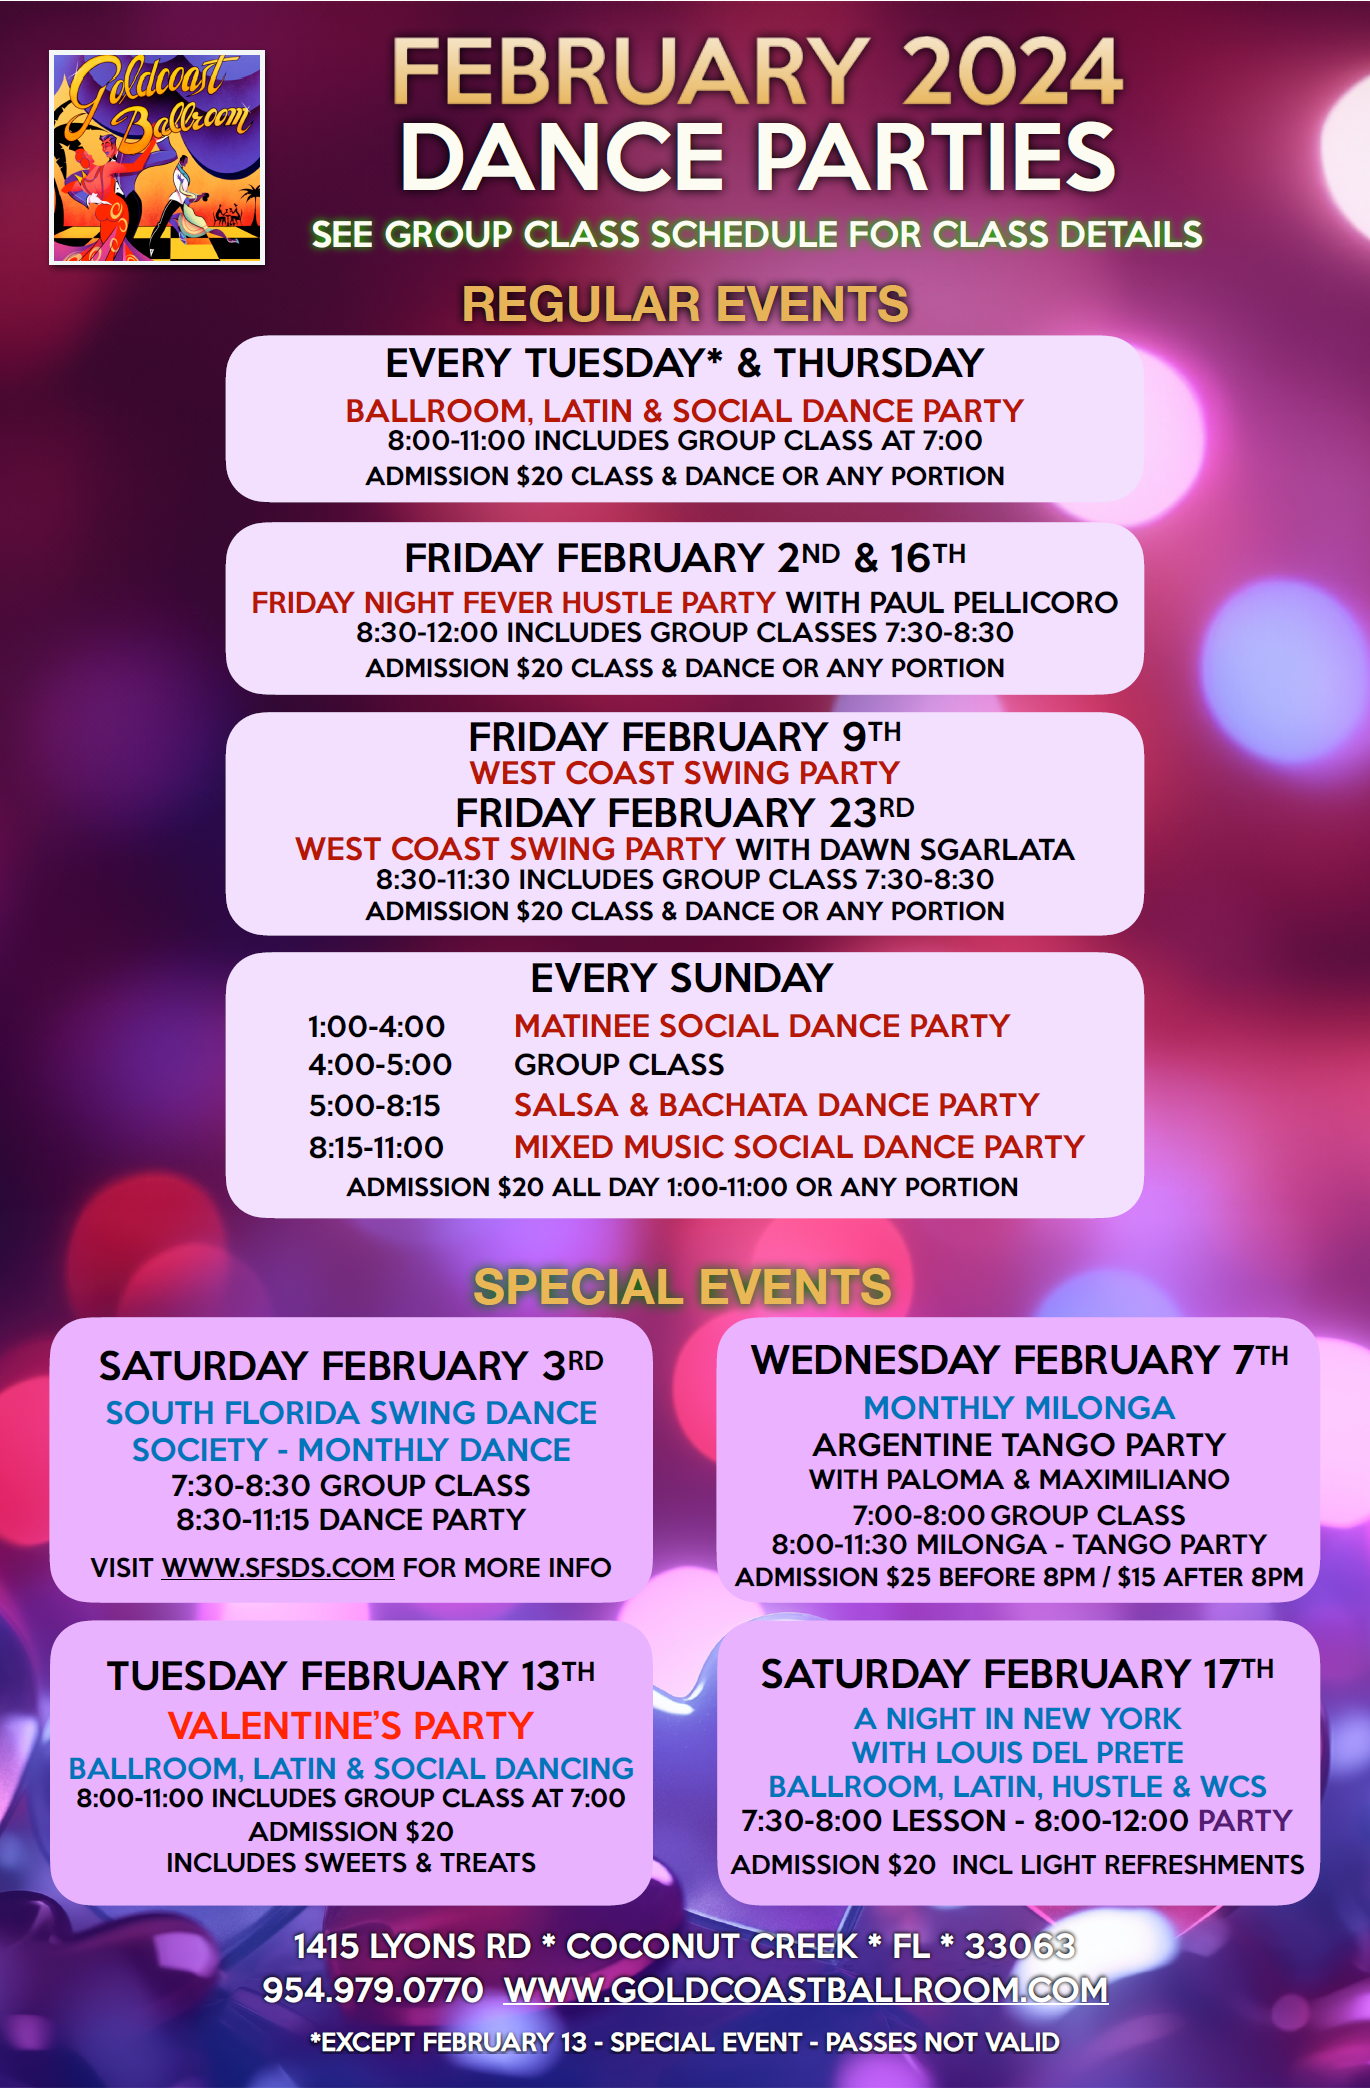 February 2024 Dance Parties at Goldcoast Ballroom